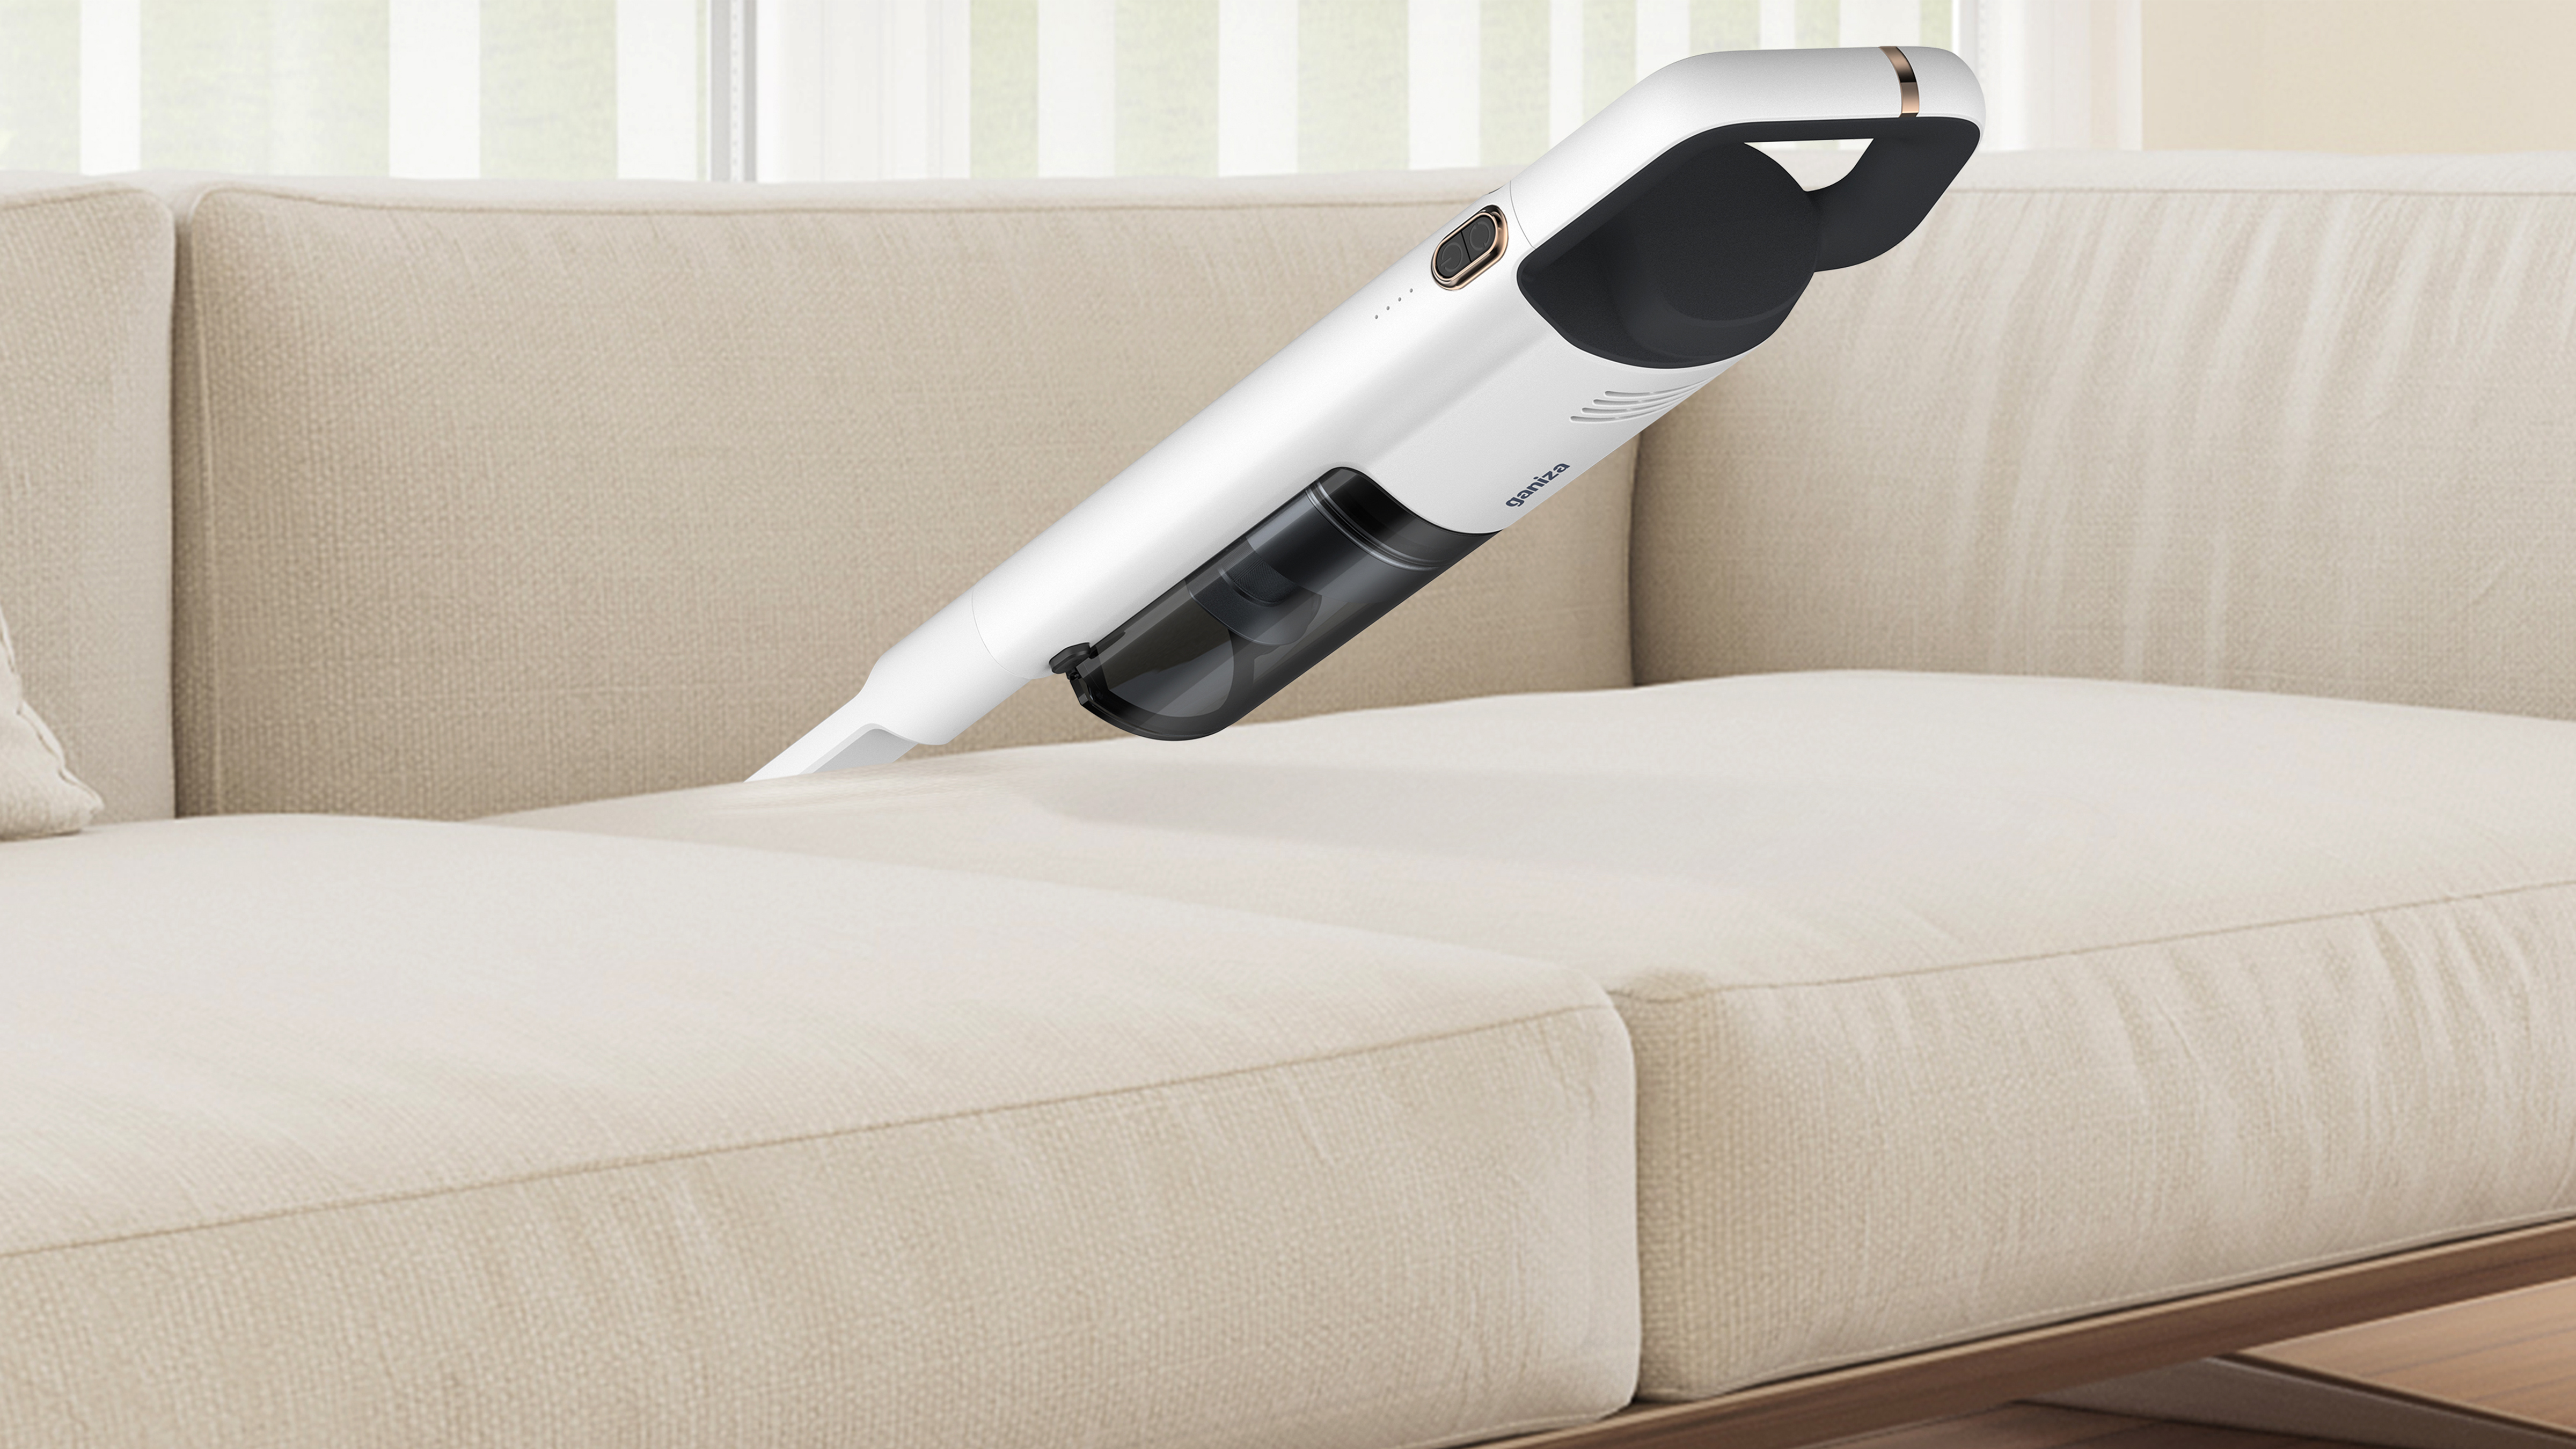 Multi-angle handheld vacuum cleaner